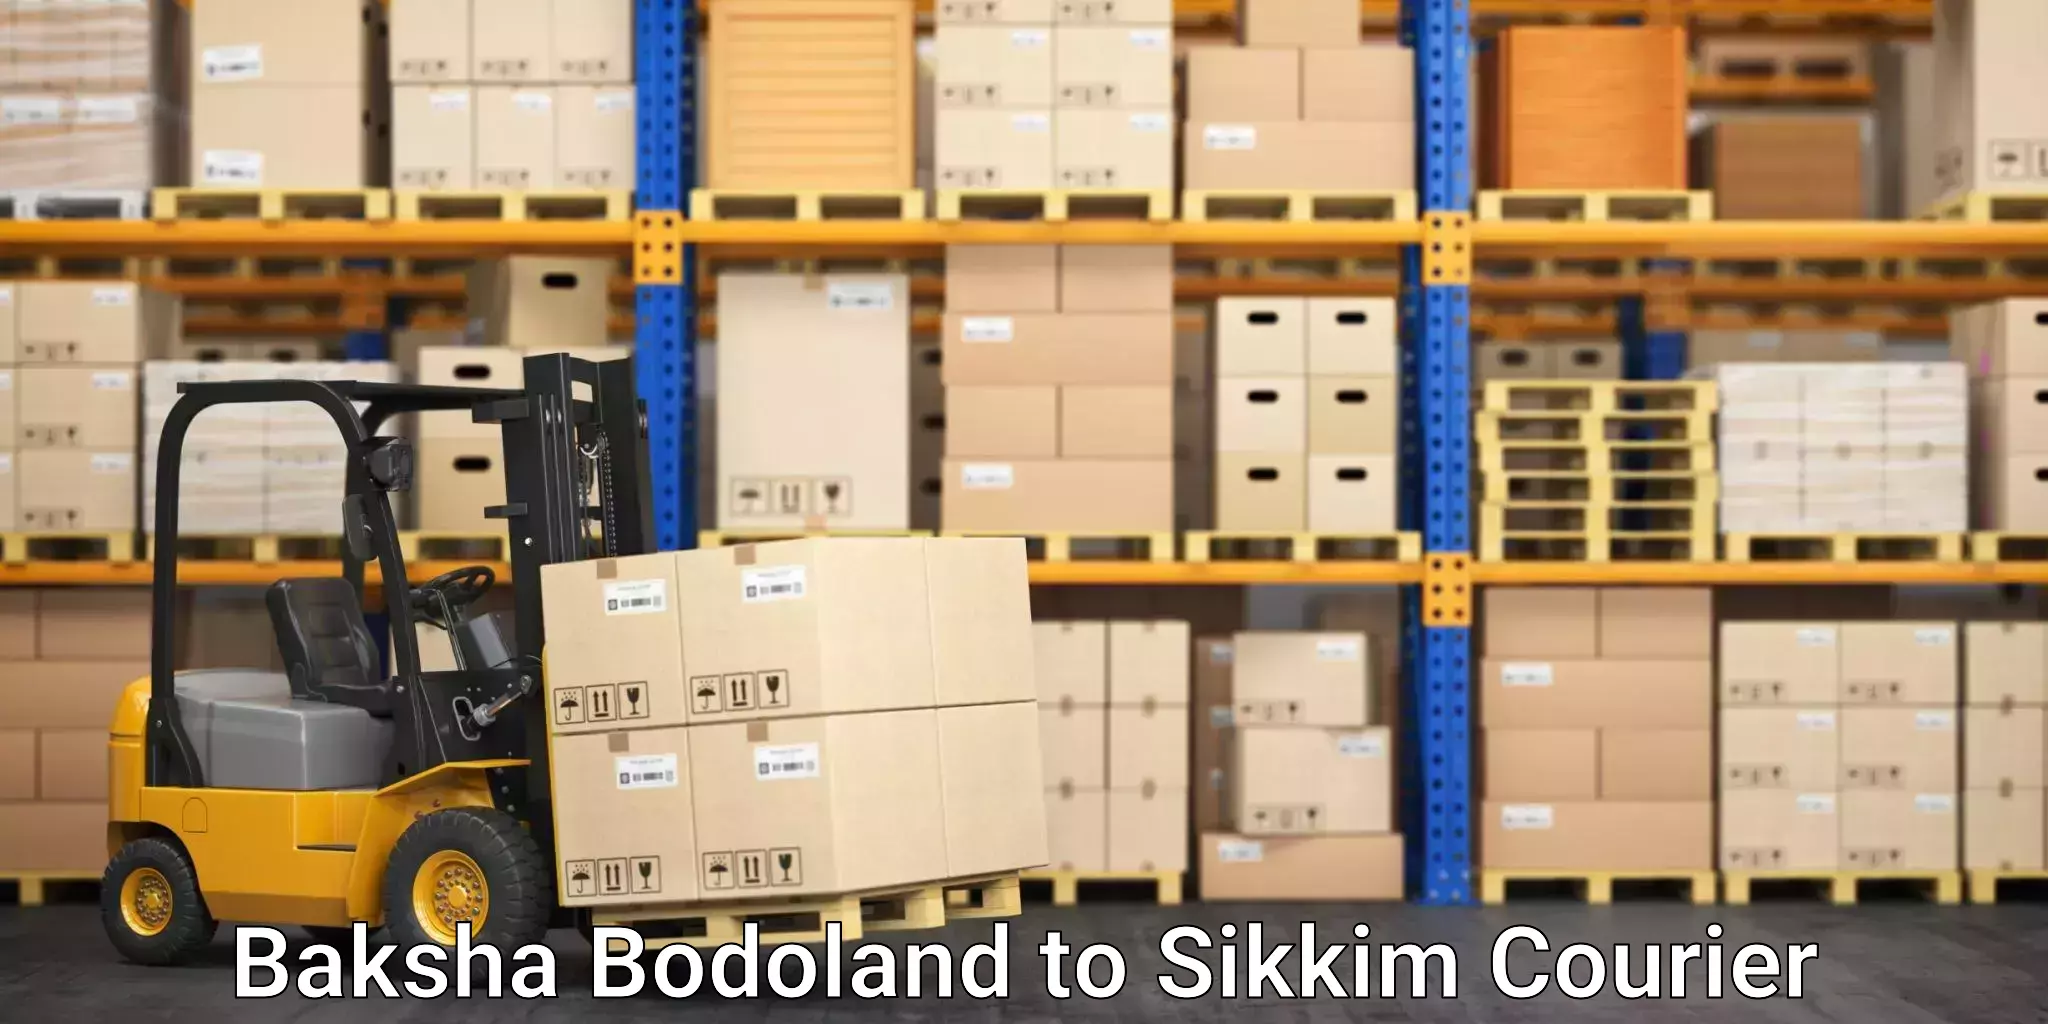 Sustainable shipping practices Baksha Bodoland to North Sikkim